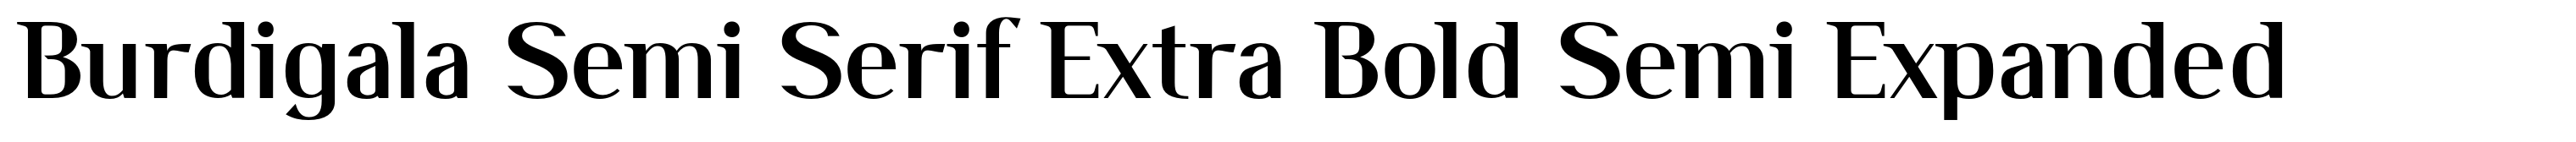 Burdigala Semi Serif Extra Bold Semi Expanded